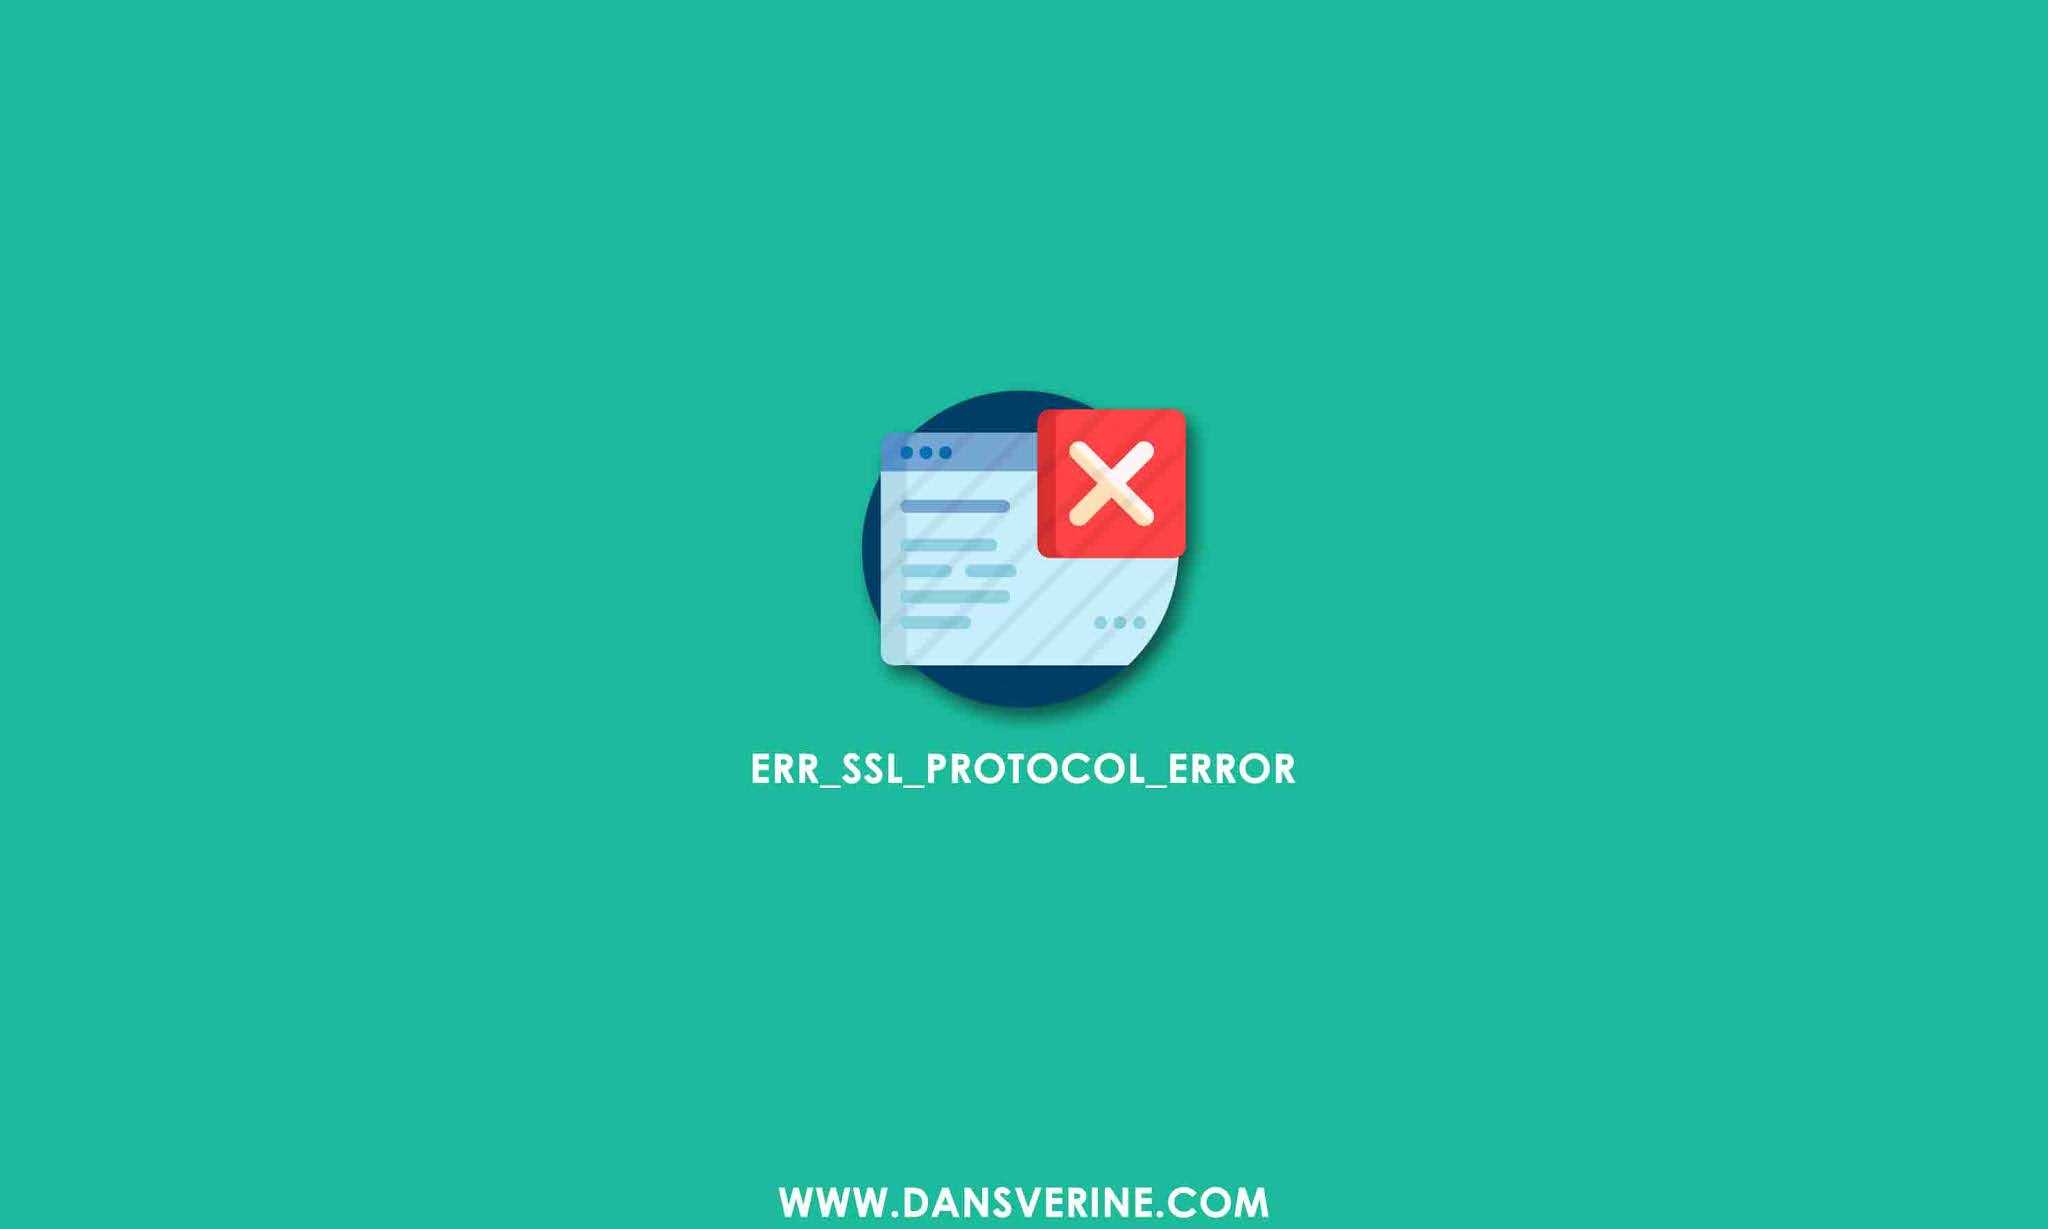 Fix: err_spdy_protocol_error in google chrome
windowsreport logo
windowsreport logo
youtube